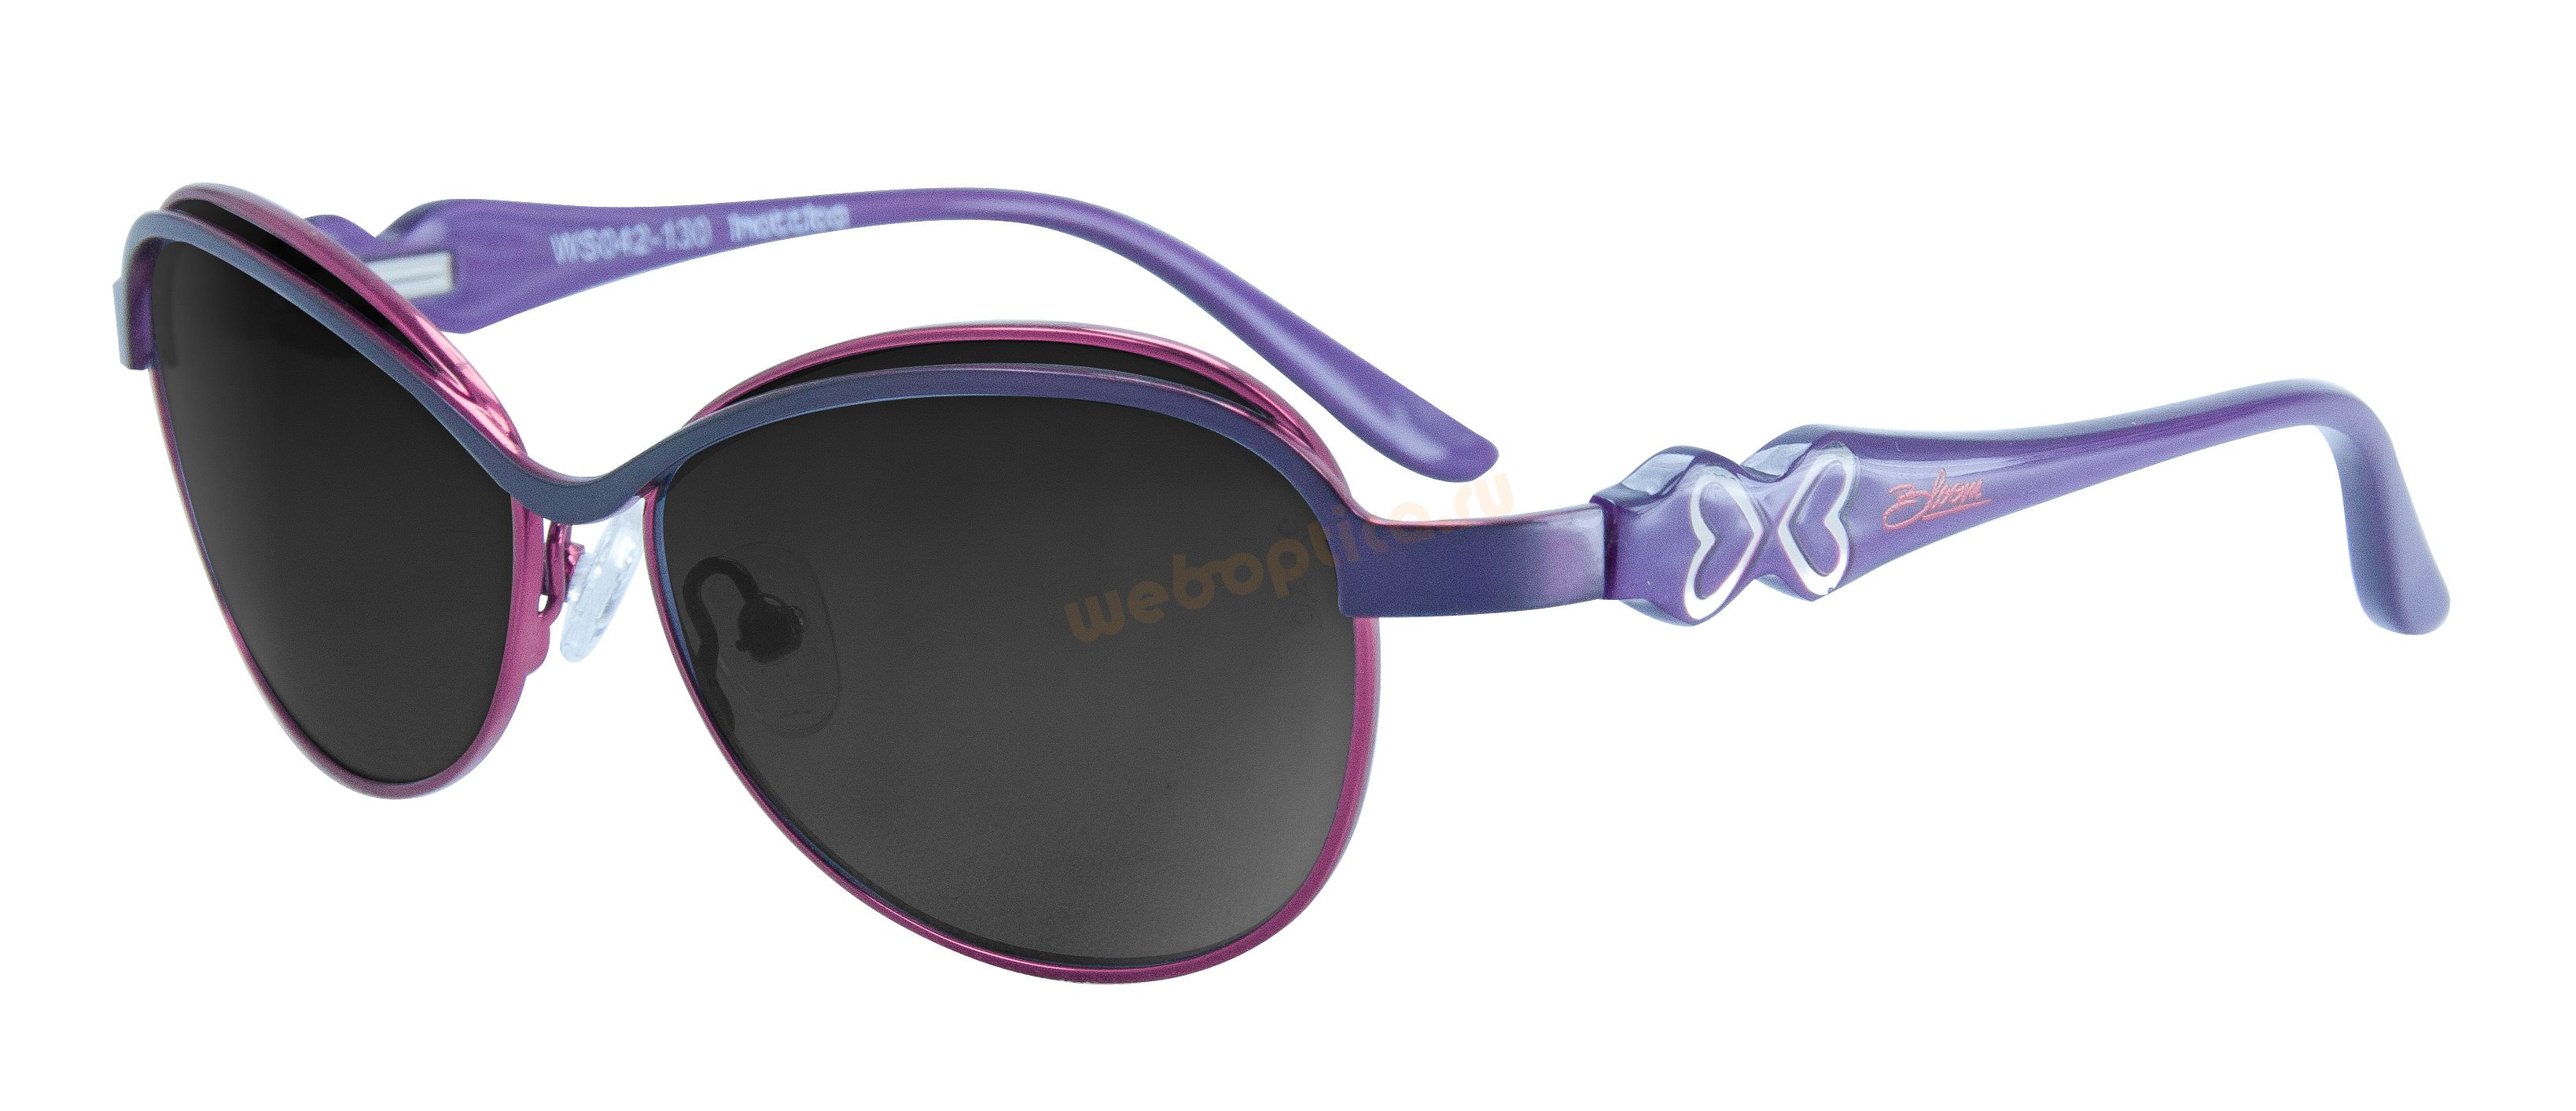 Cолнцезащитные очки WINX WS042 130